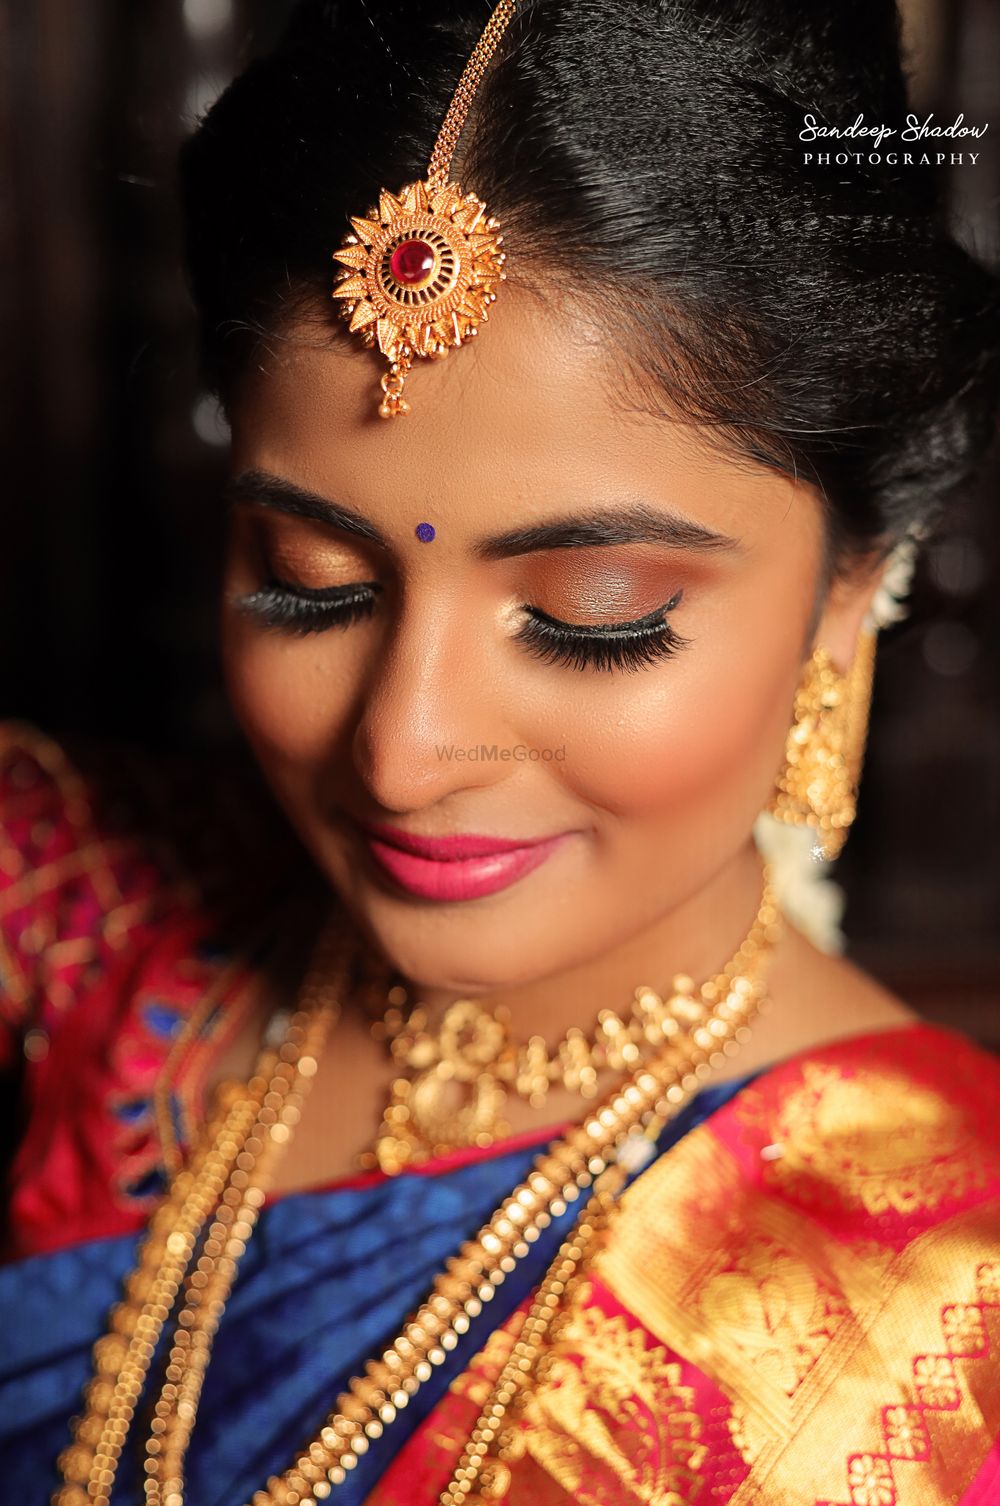 Photo By Vidya Shetty Makeover - Bridal Makeup